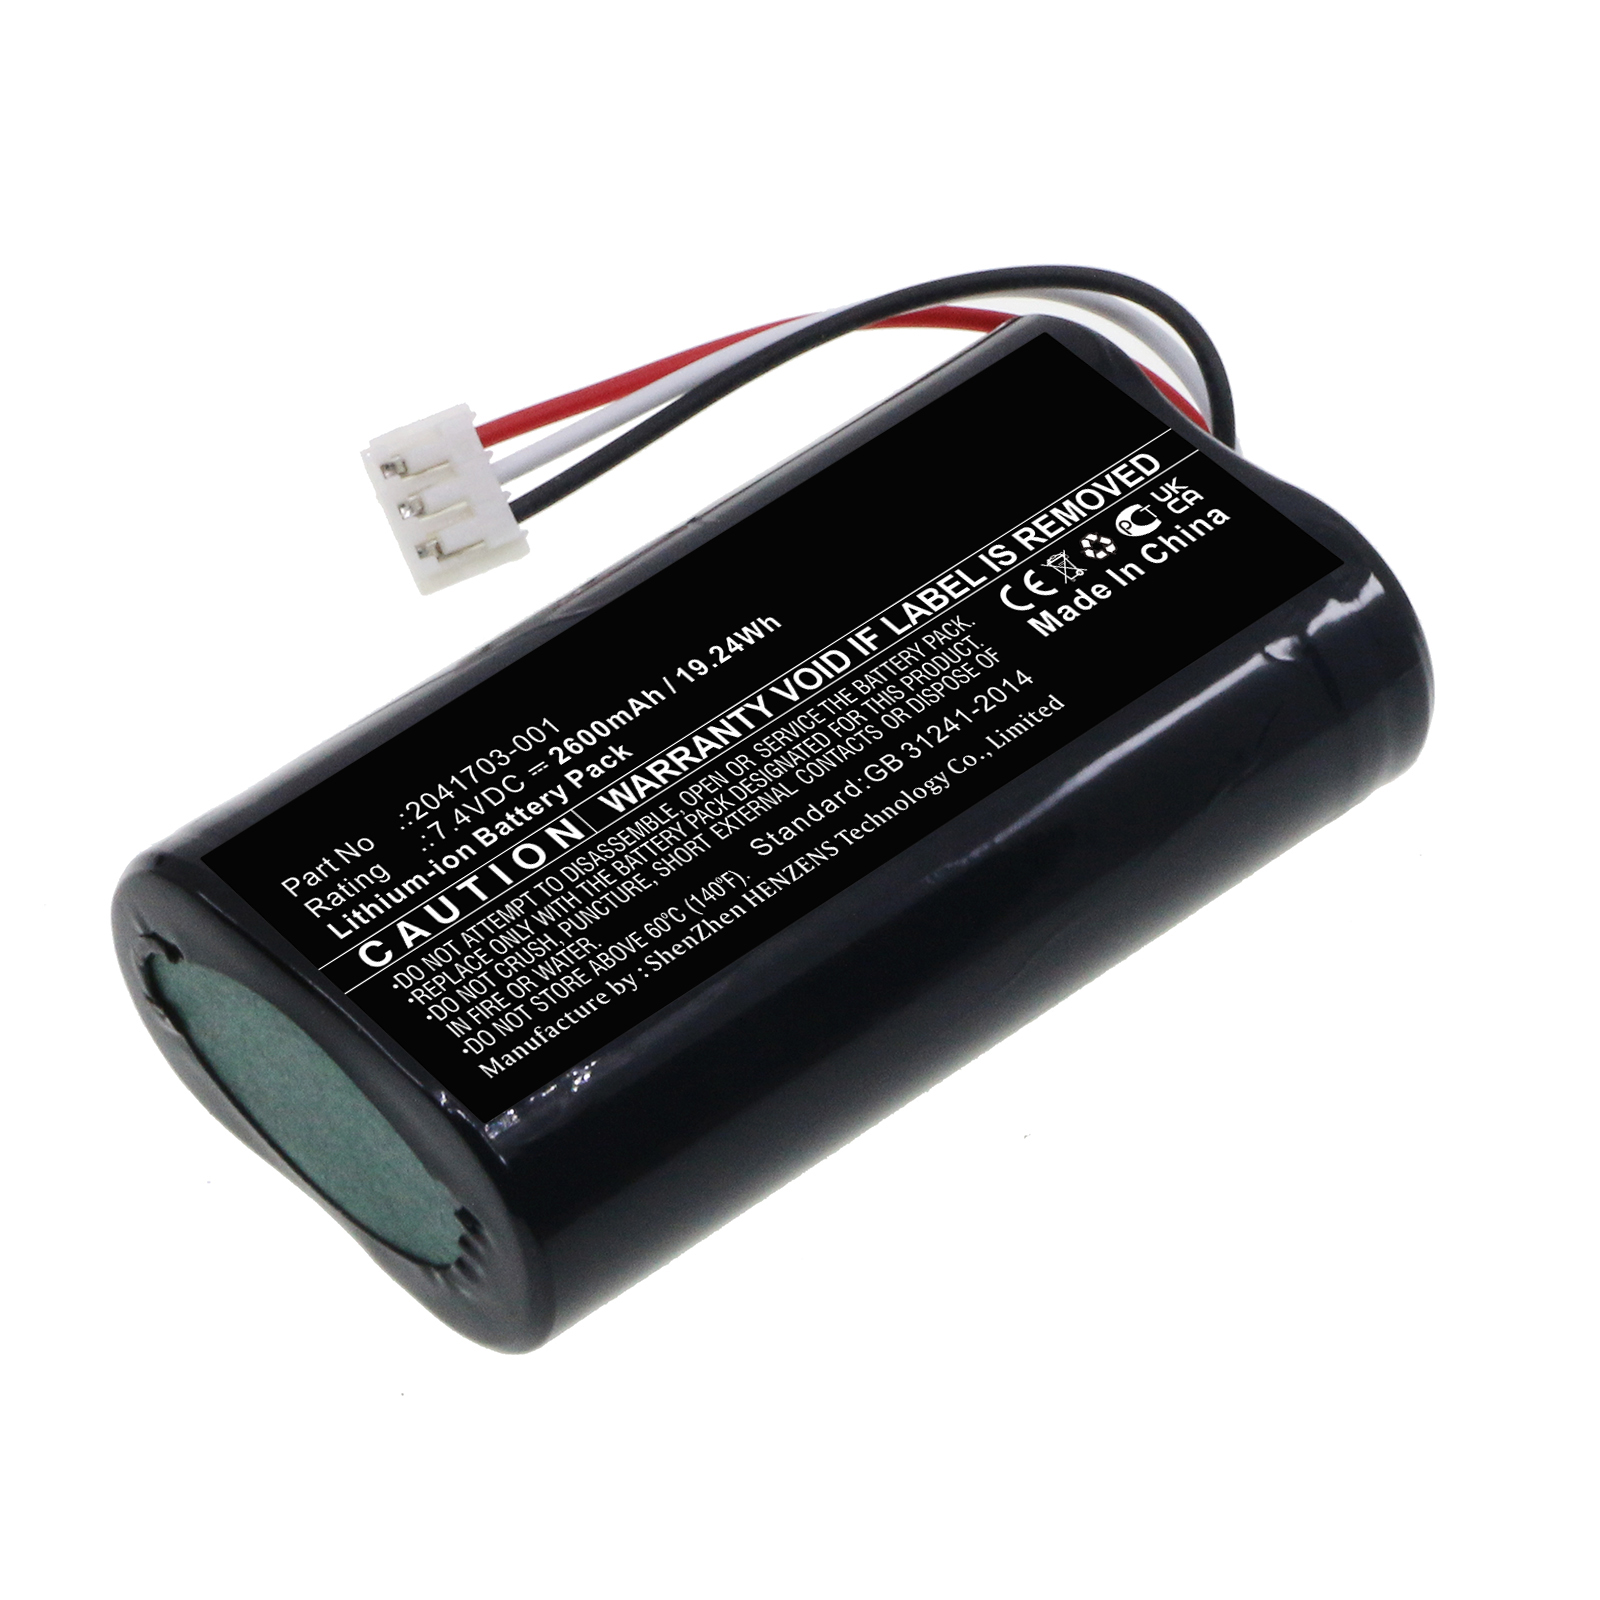 Synergy Digital Medical Battery, Compatible with GE 2041703-001 Medical Battery (Li-ion, 7.4V, 2600mAh)